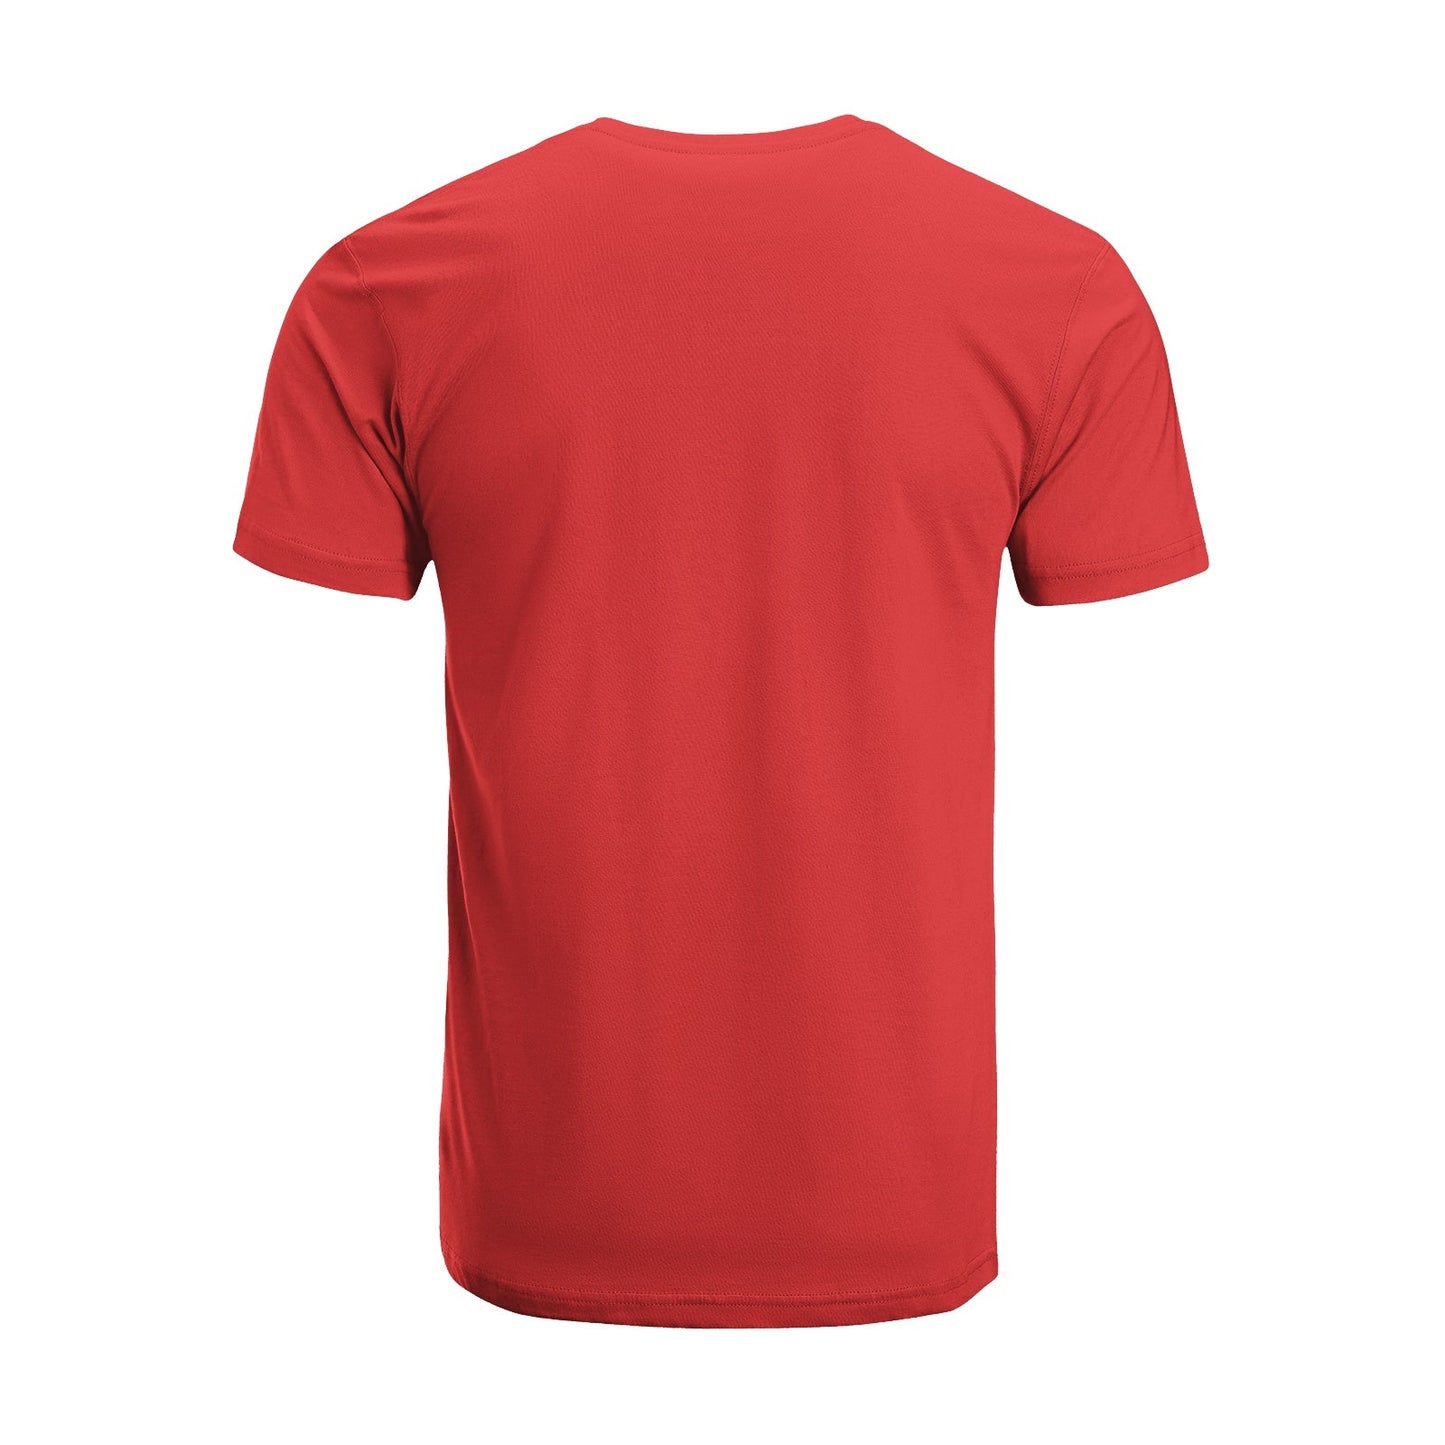 Unisex Short Sleeve Crew Neck Cotton Jersey T-Shirt VEGAN 15